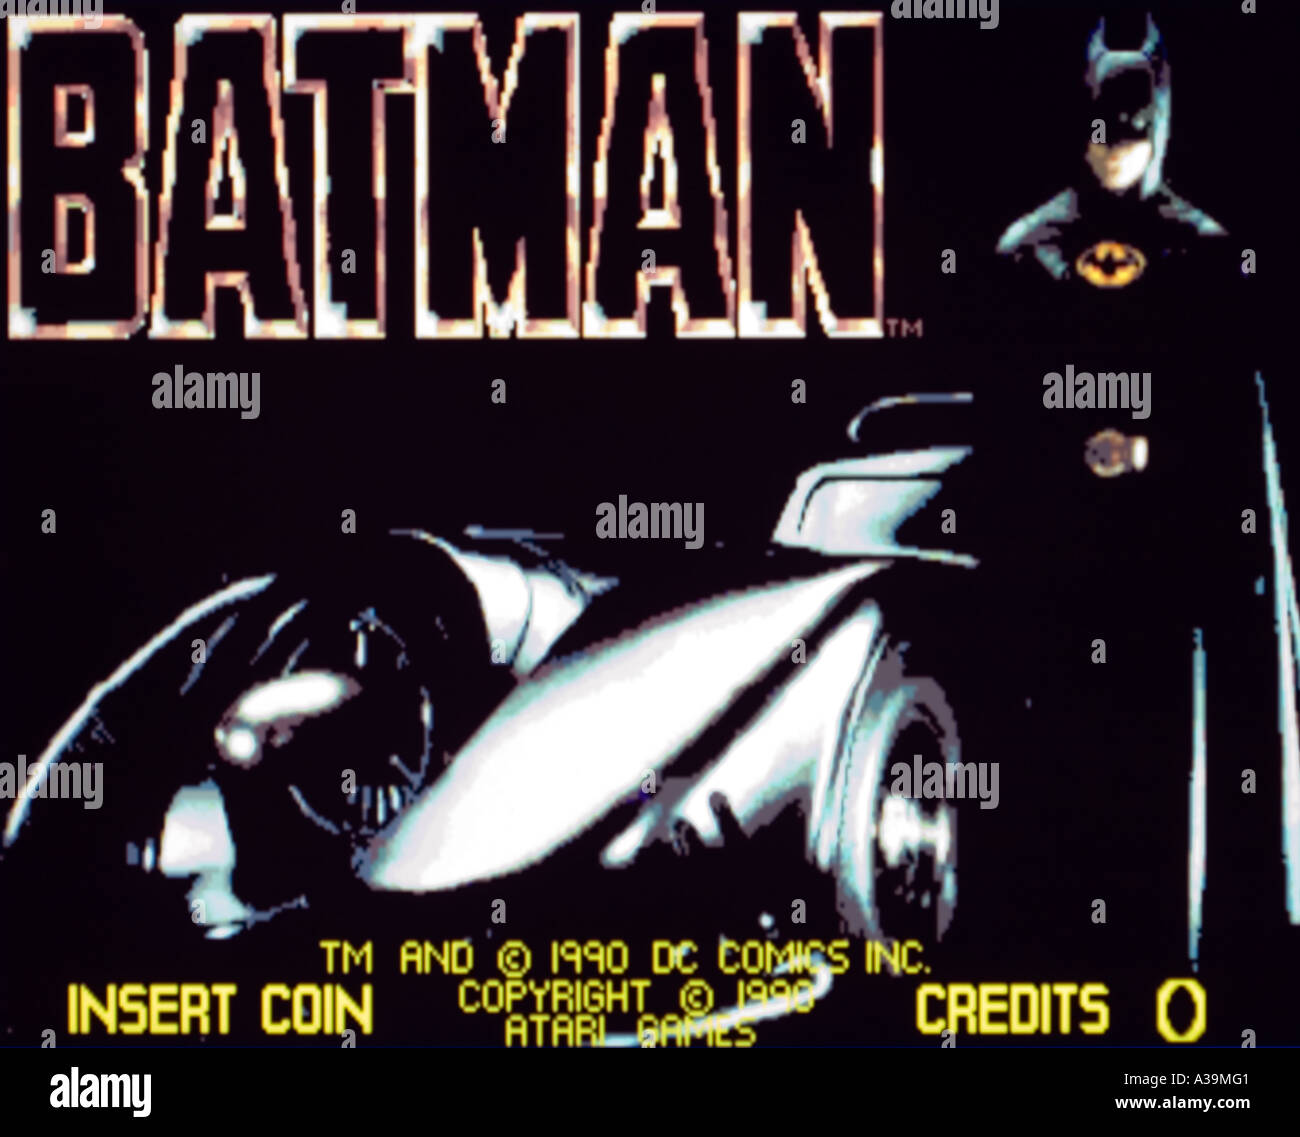 Batman Atari Games 1990 vintage arcade videogame screenshot - EDITORIAL USE ONLY Stock Photo